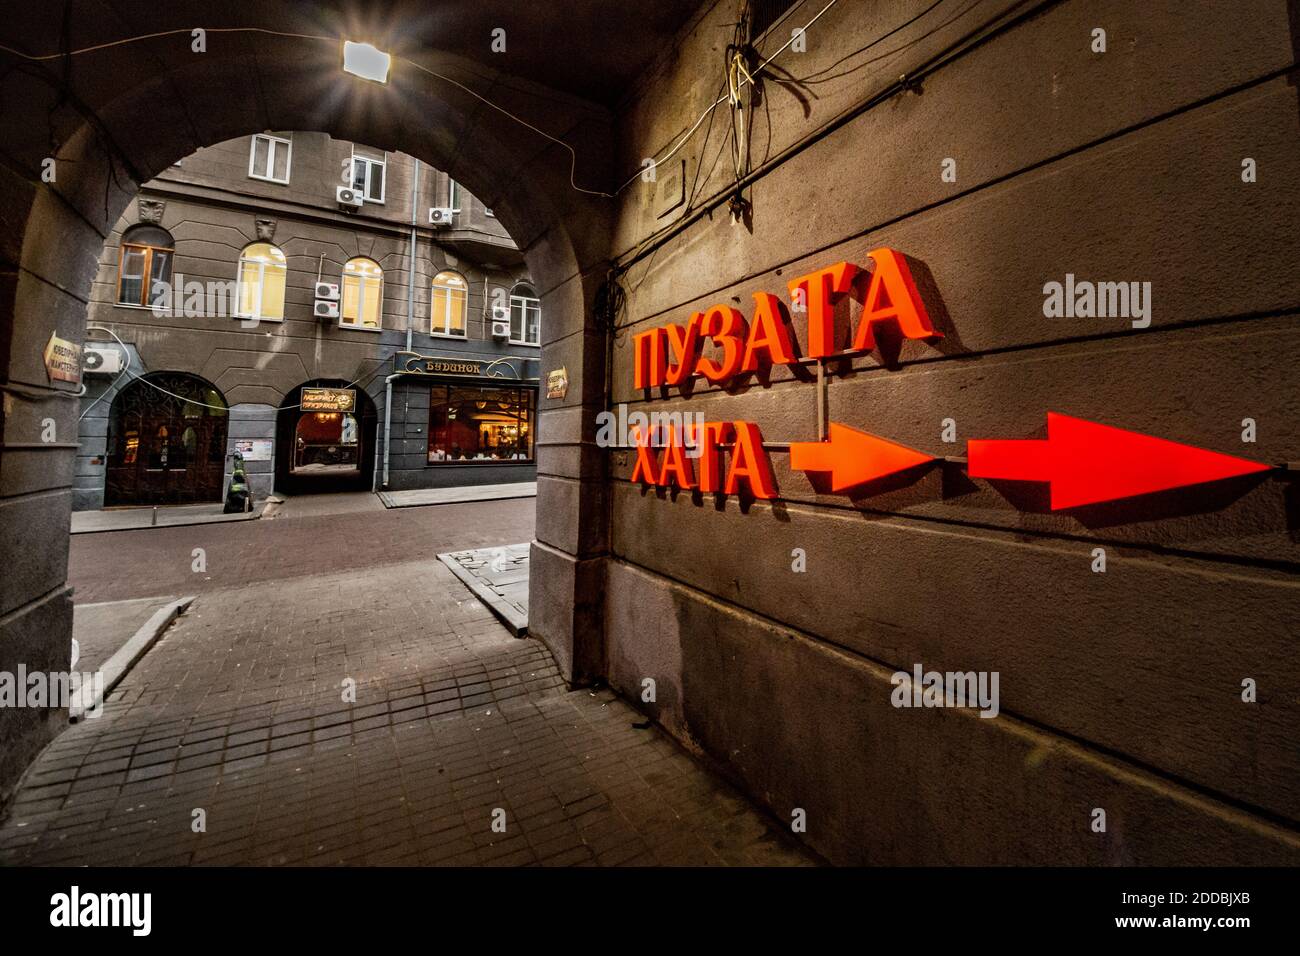 Puzata hata fast food restaurants, Kiev, Ukraine Stock Photo